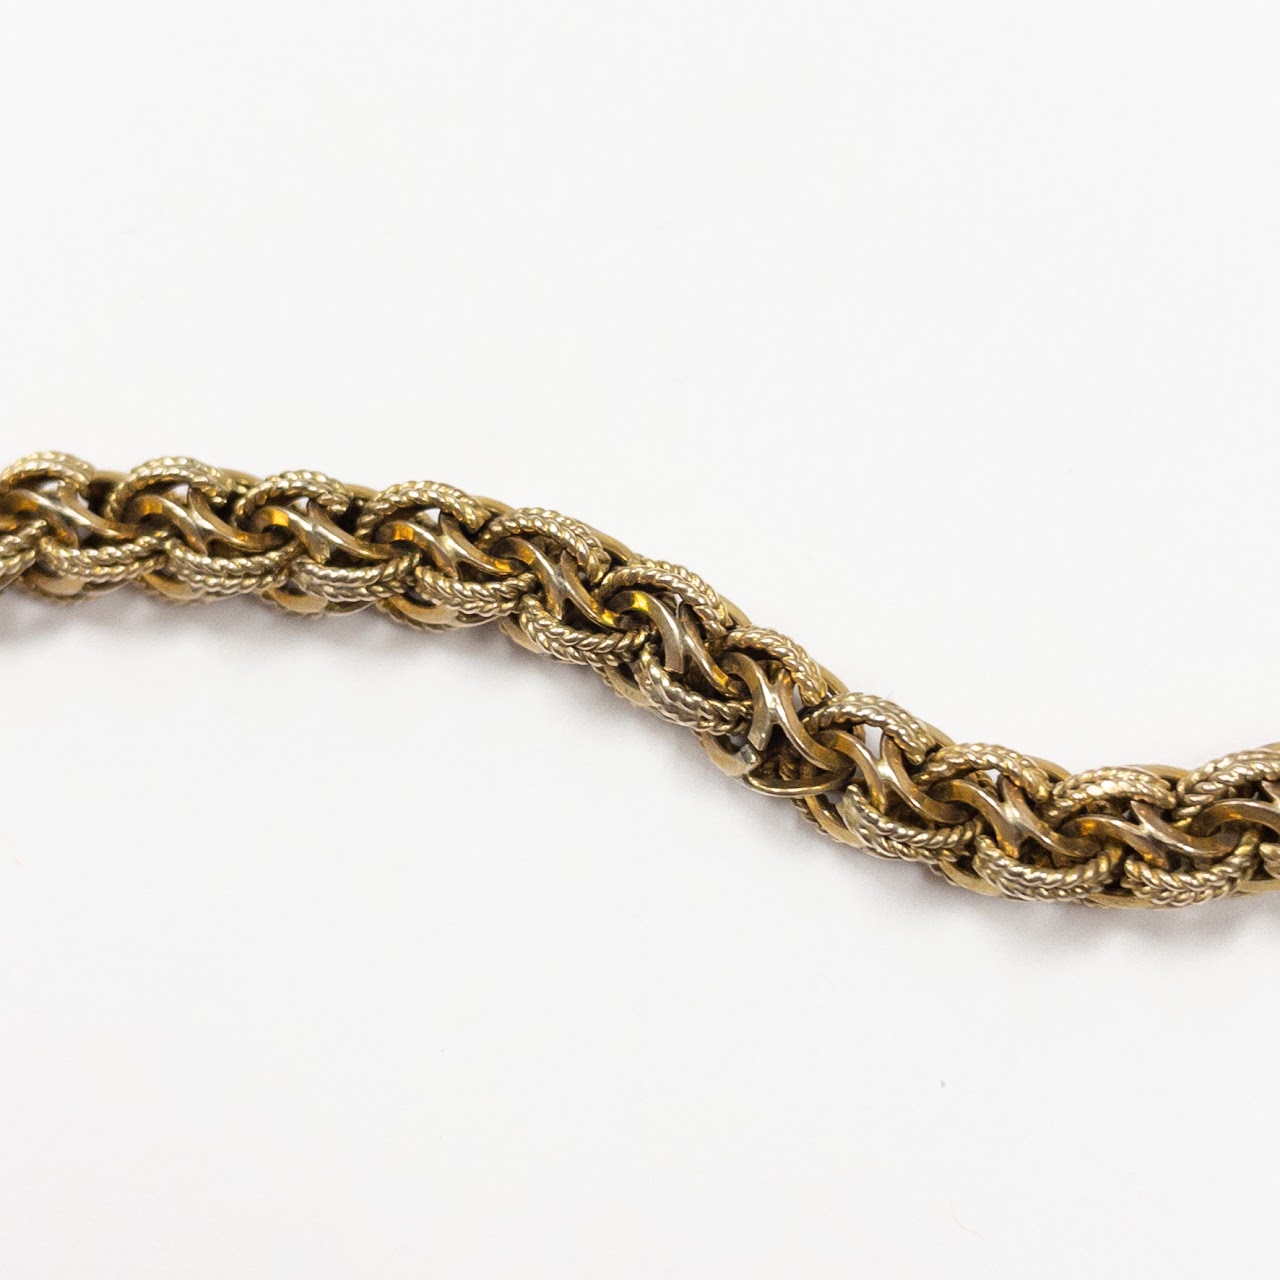 9K Gold Victorian Watch Chain with Slide